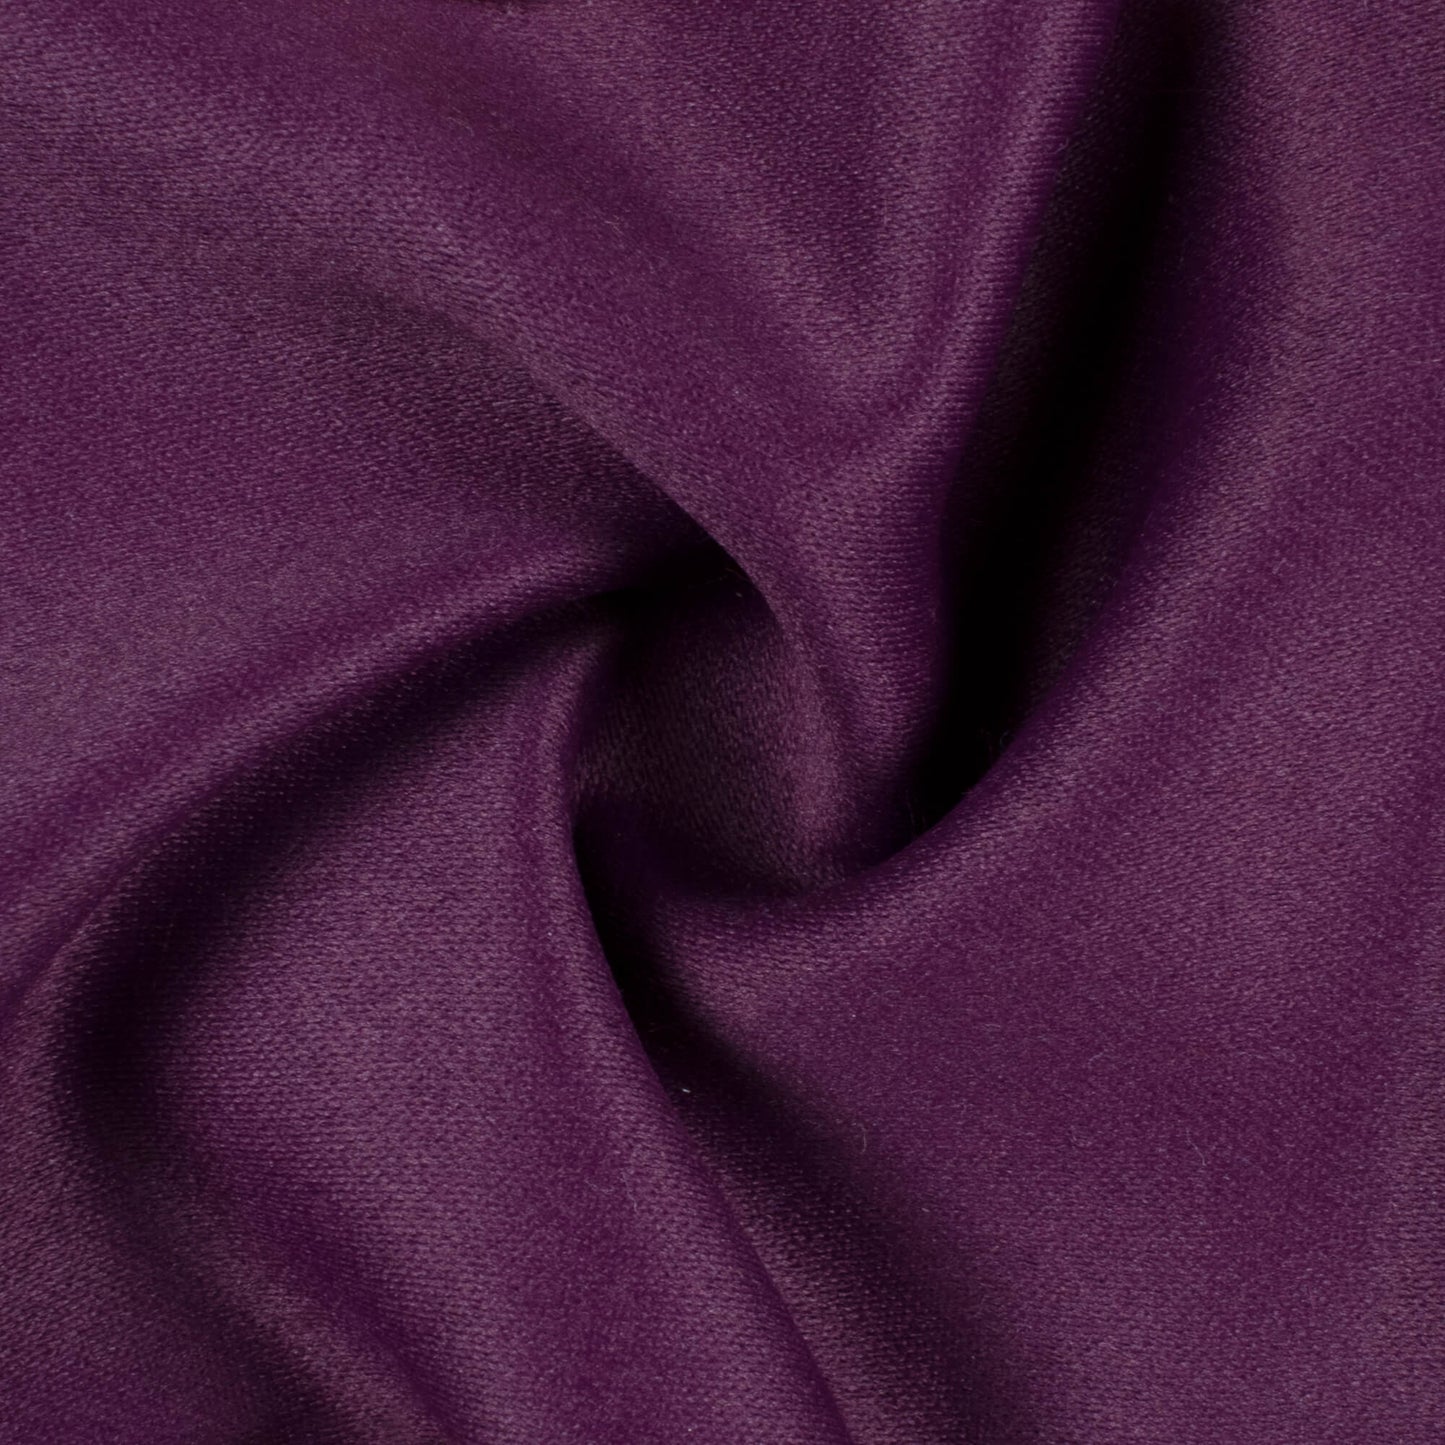 Plum Purple Plain Dense Crepe Satin Exclusive Shirting Fabric (Width 36 Inches)